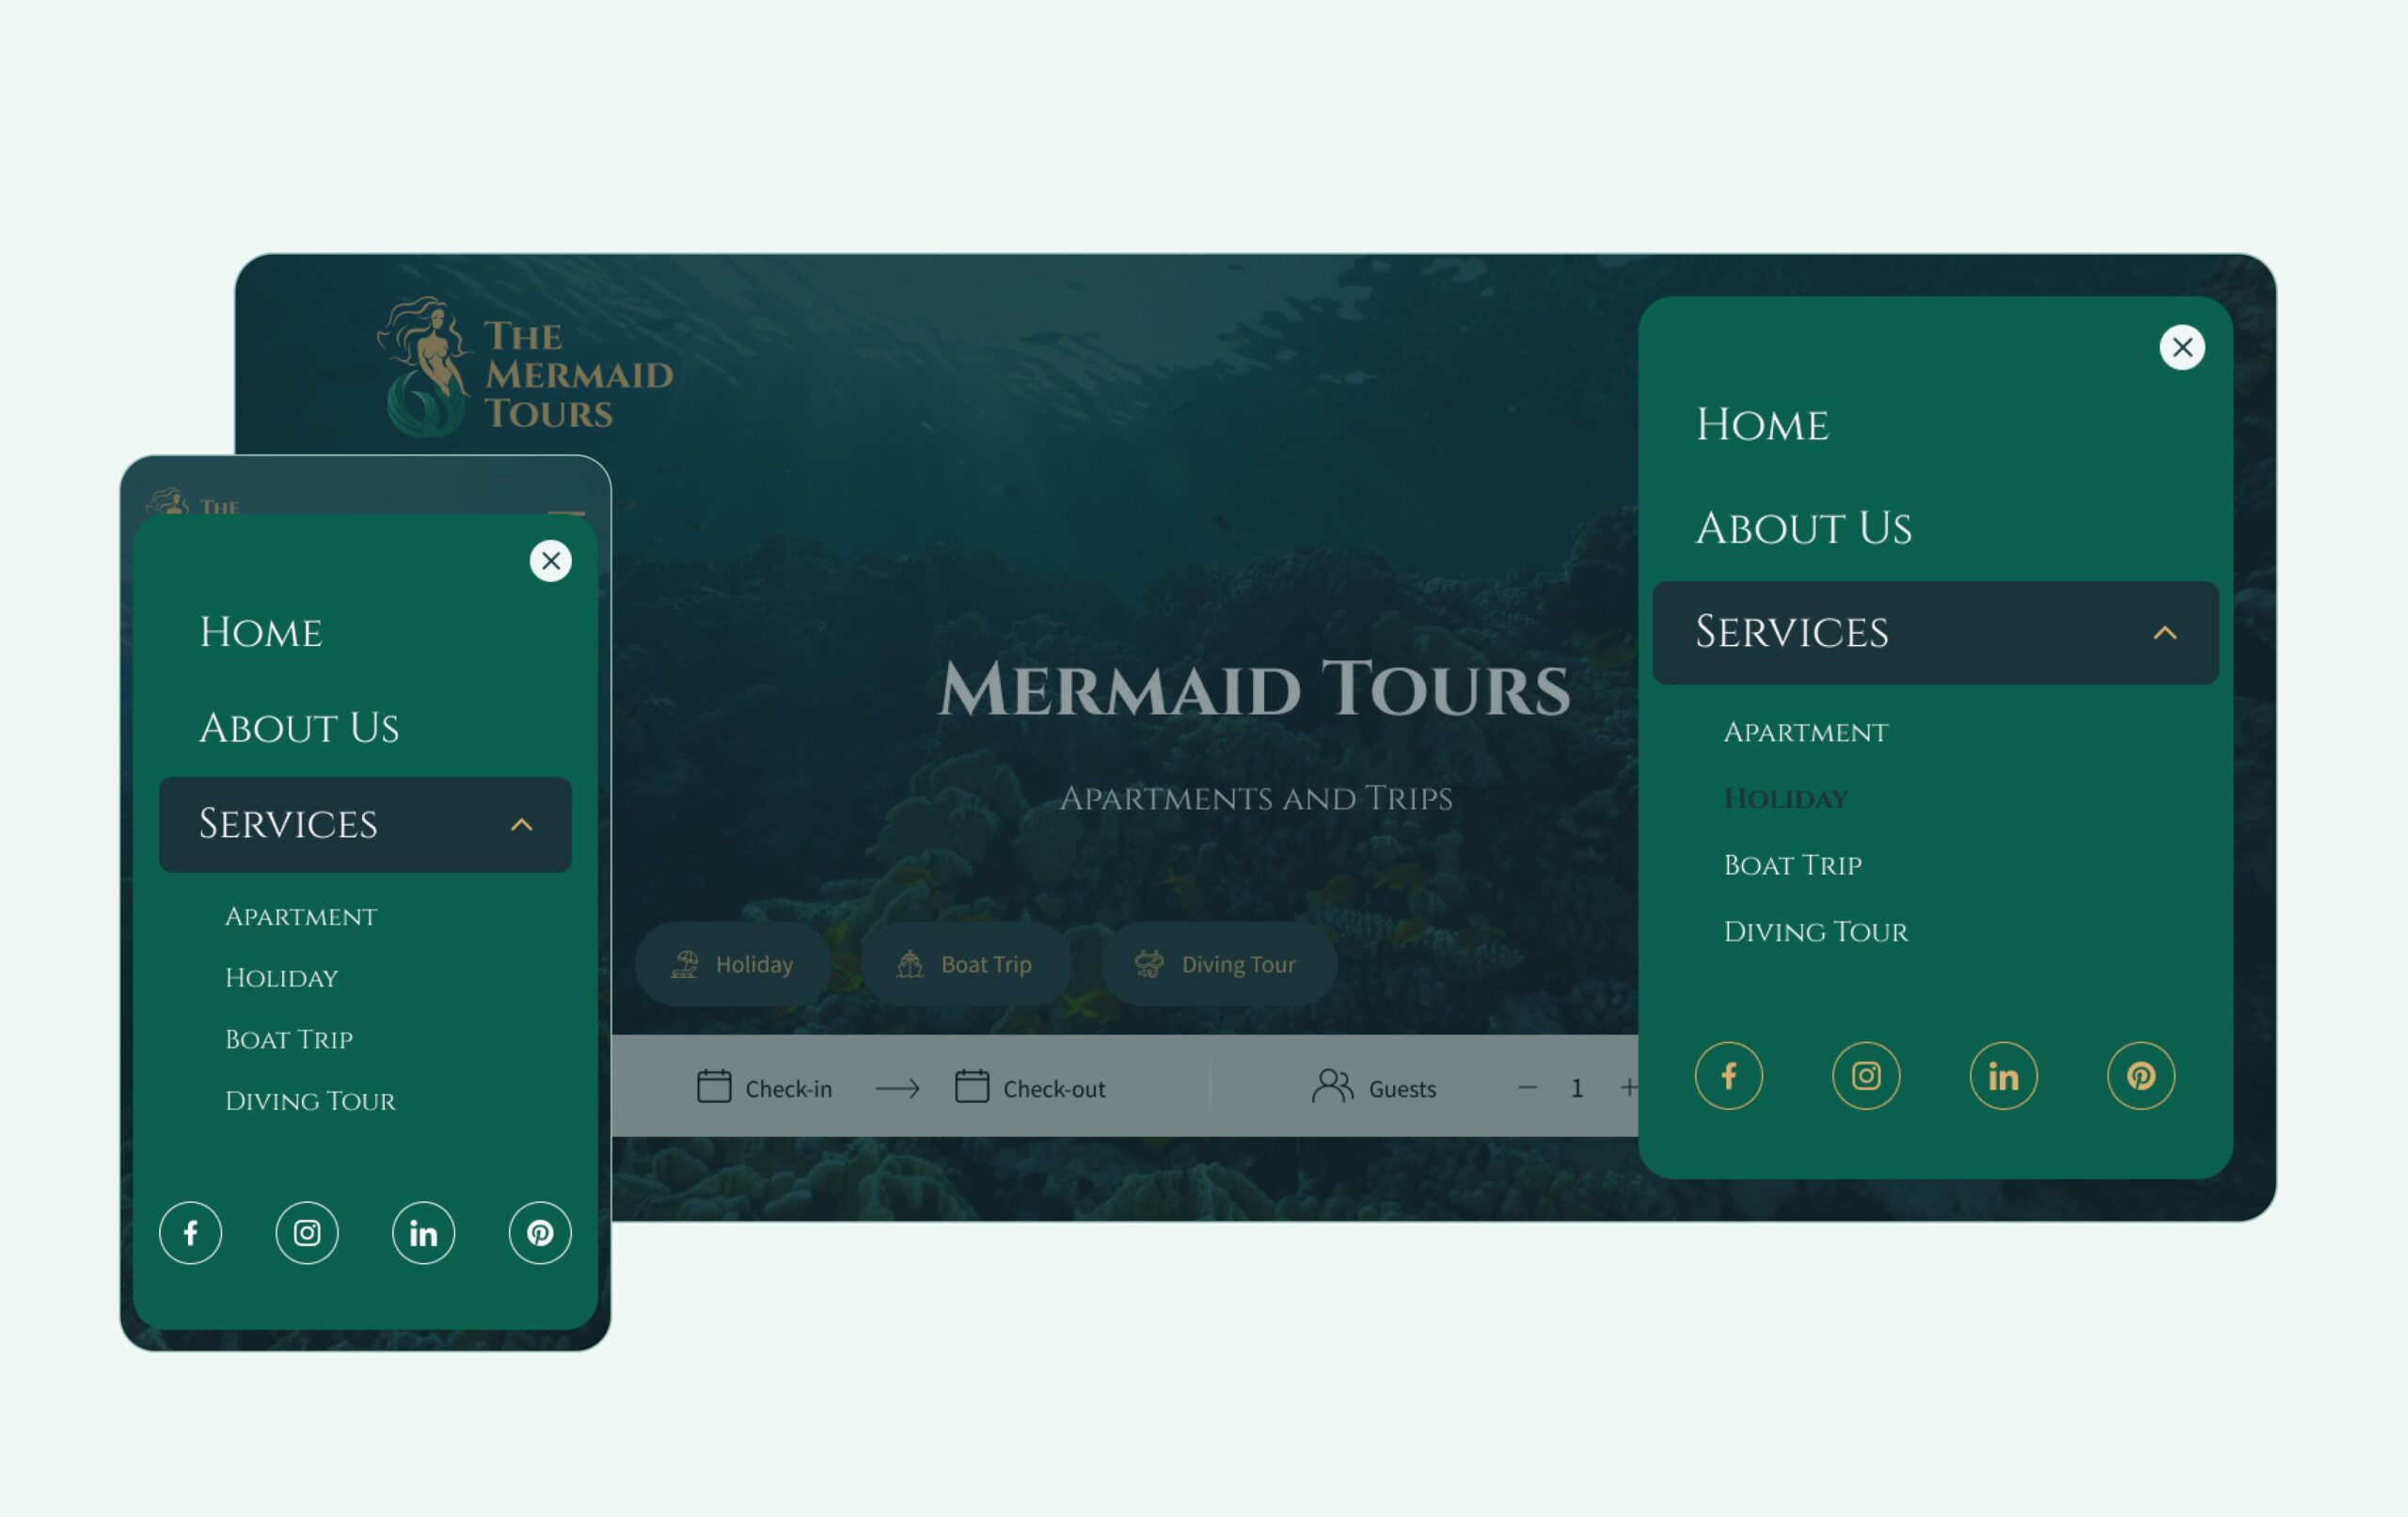 Altum Software - The Mermaid Tours sidebar menu